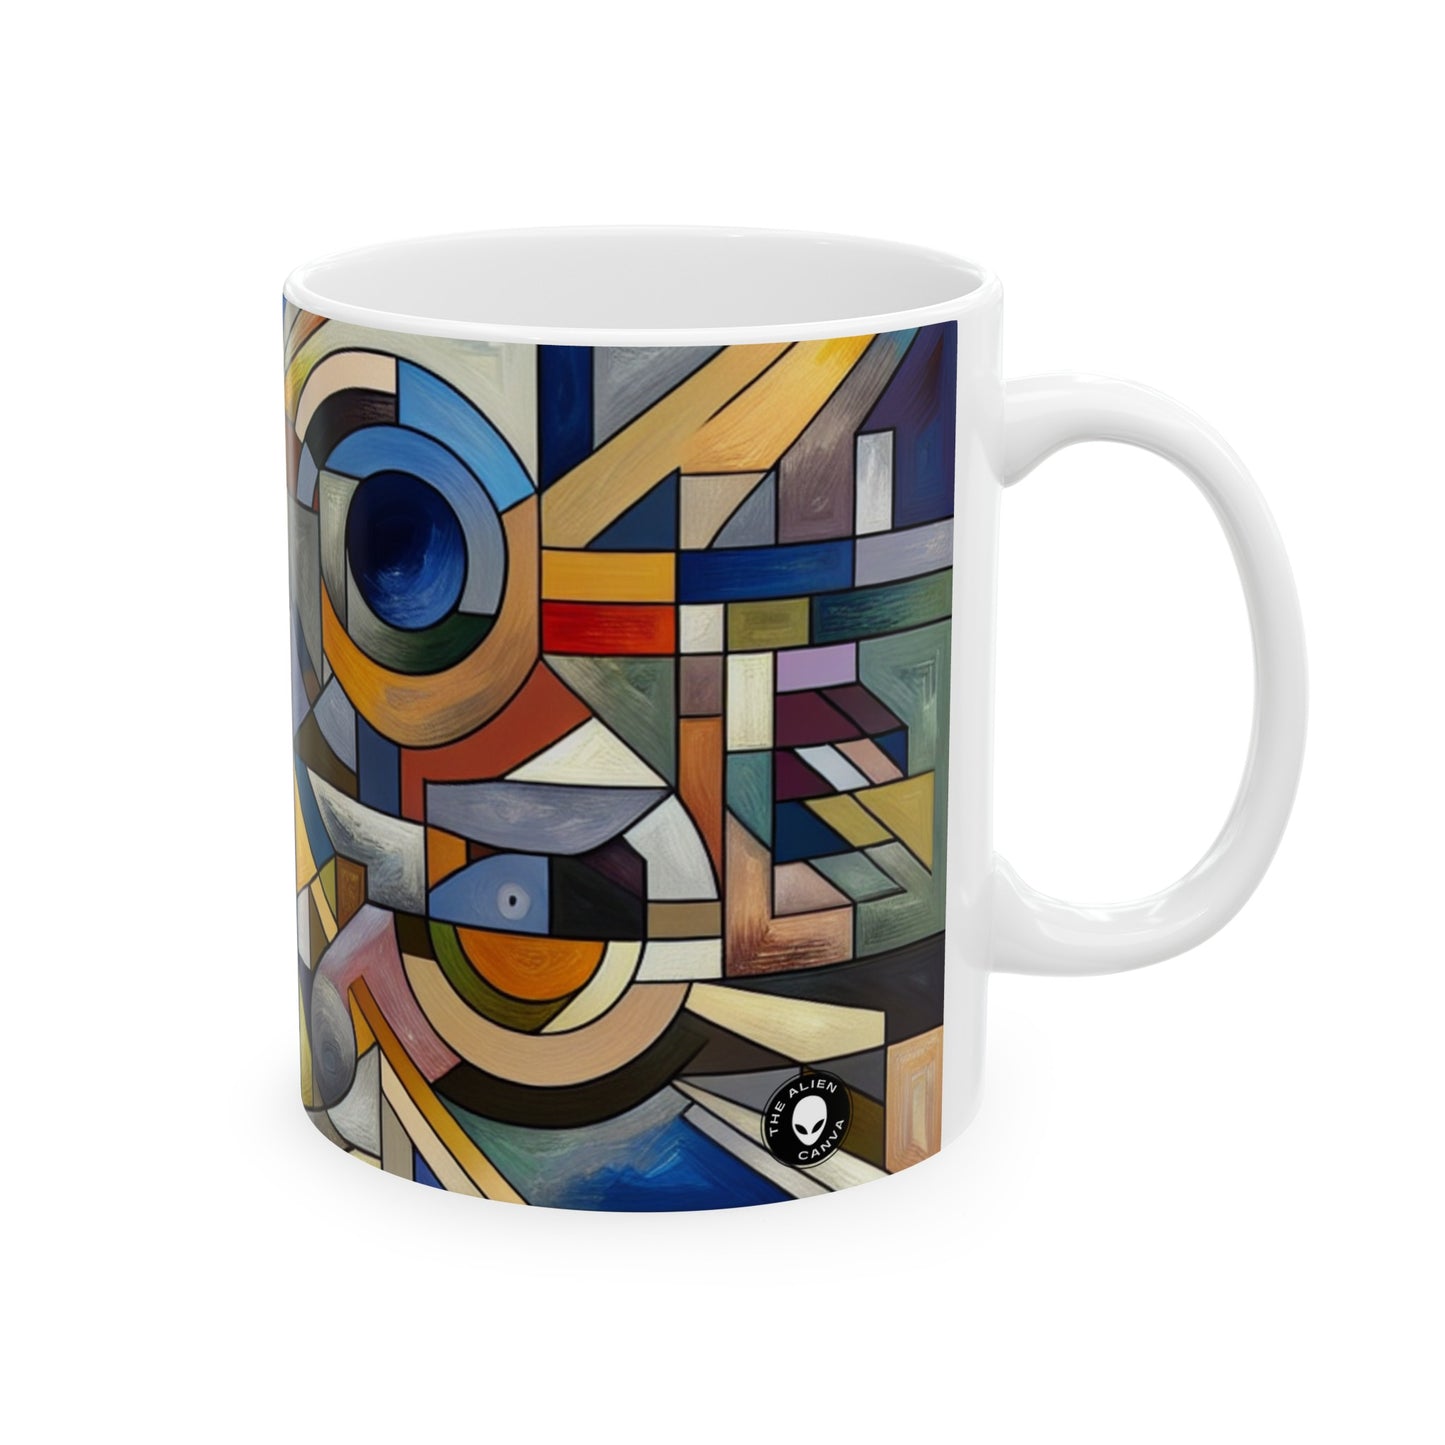 "Urban Fragmentation: An Analytical Cubist Cityscape" - The Alien Ceramic Mug 11oz Analytical Cubism